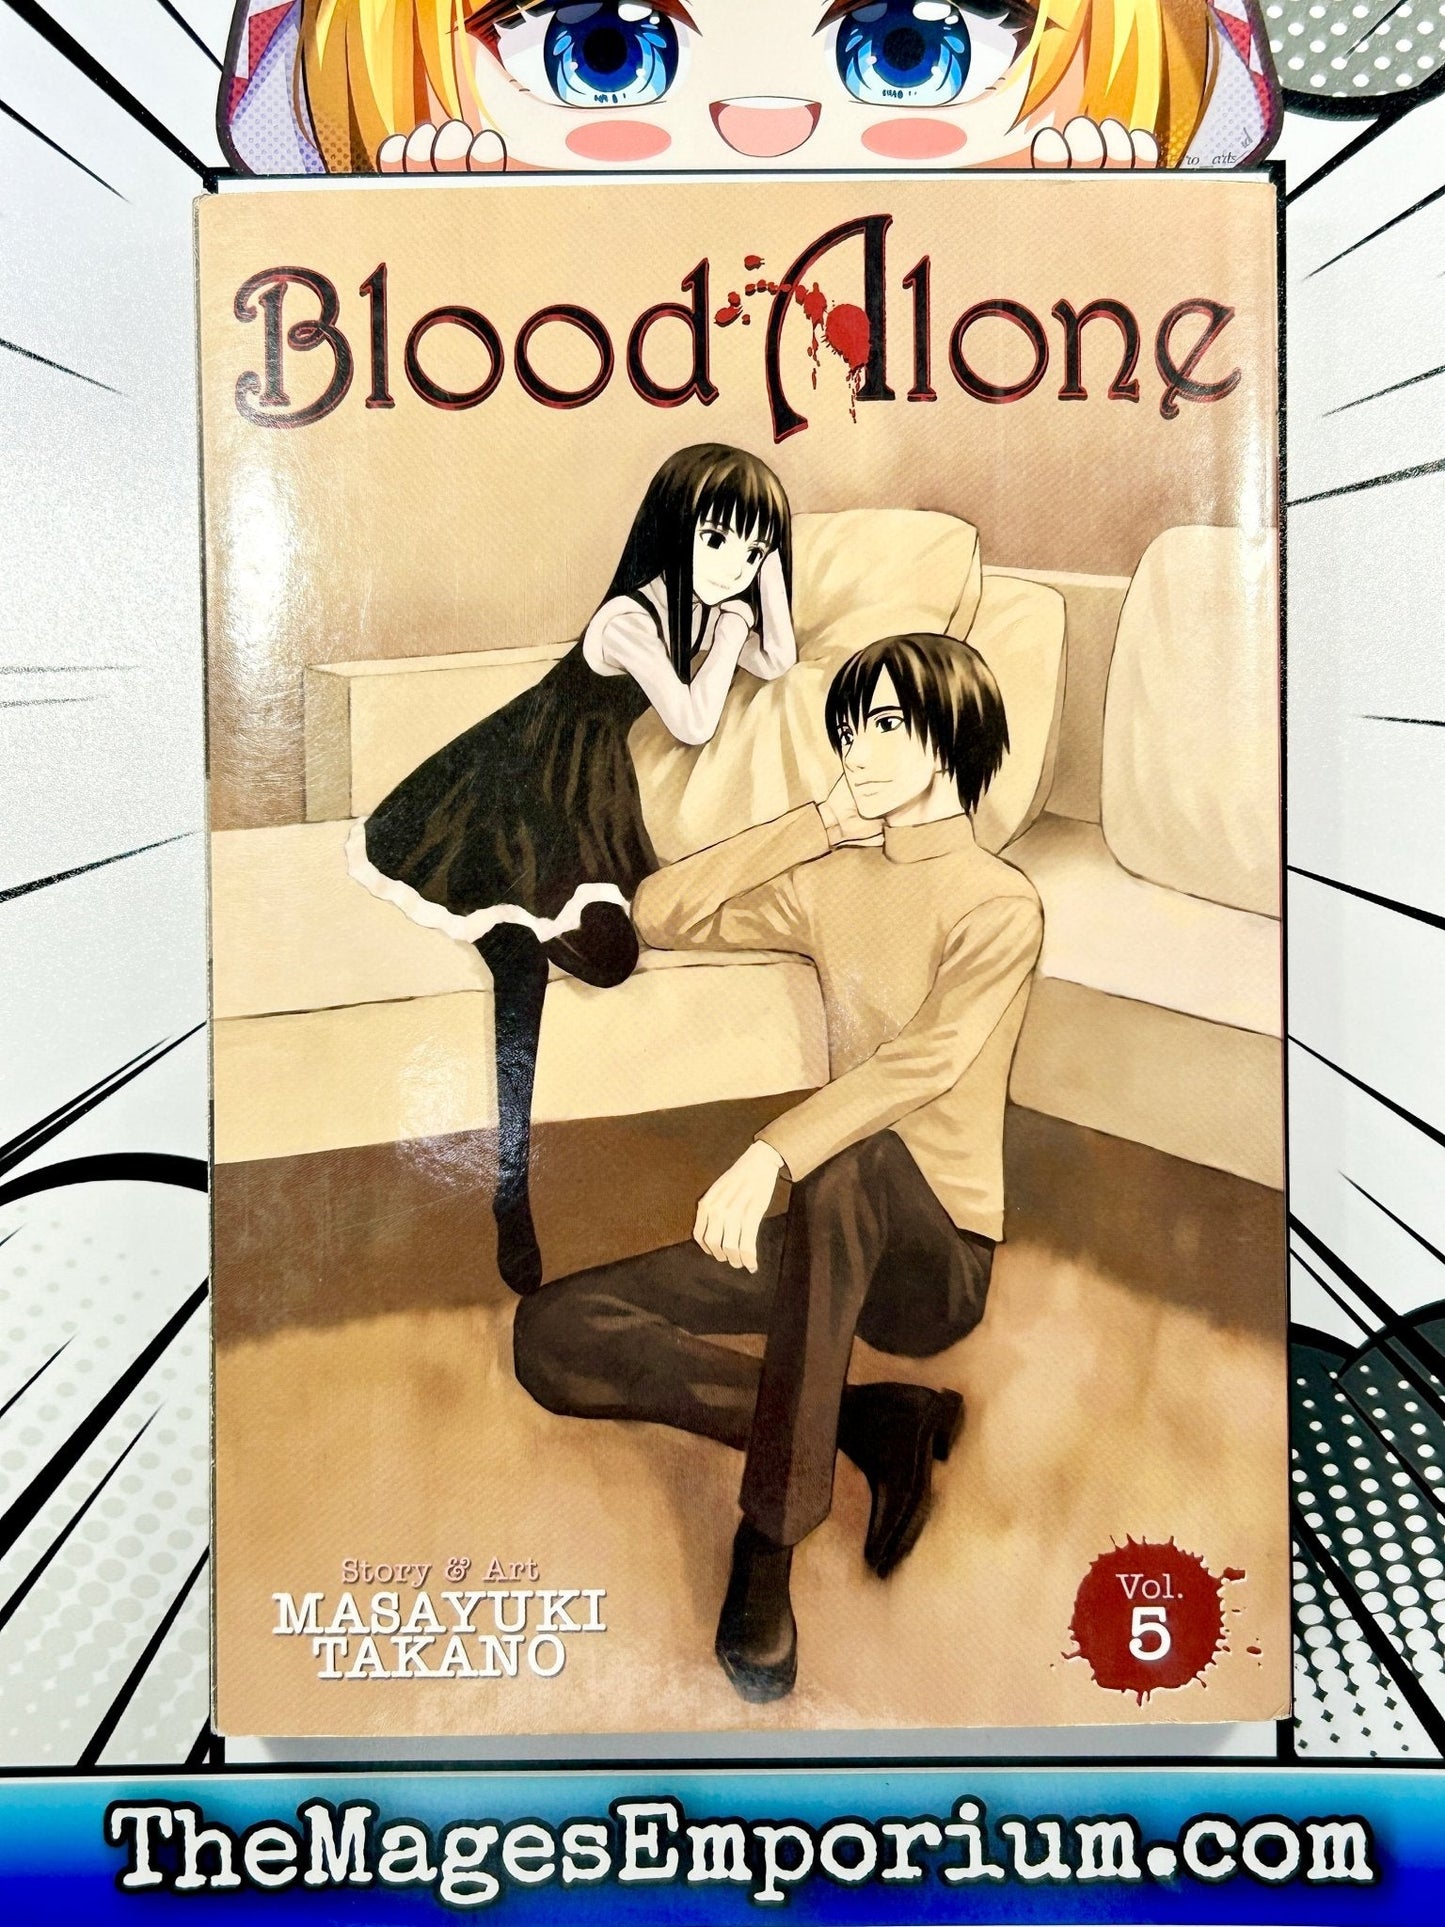 Blood Alone Vol 5